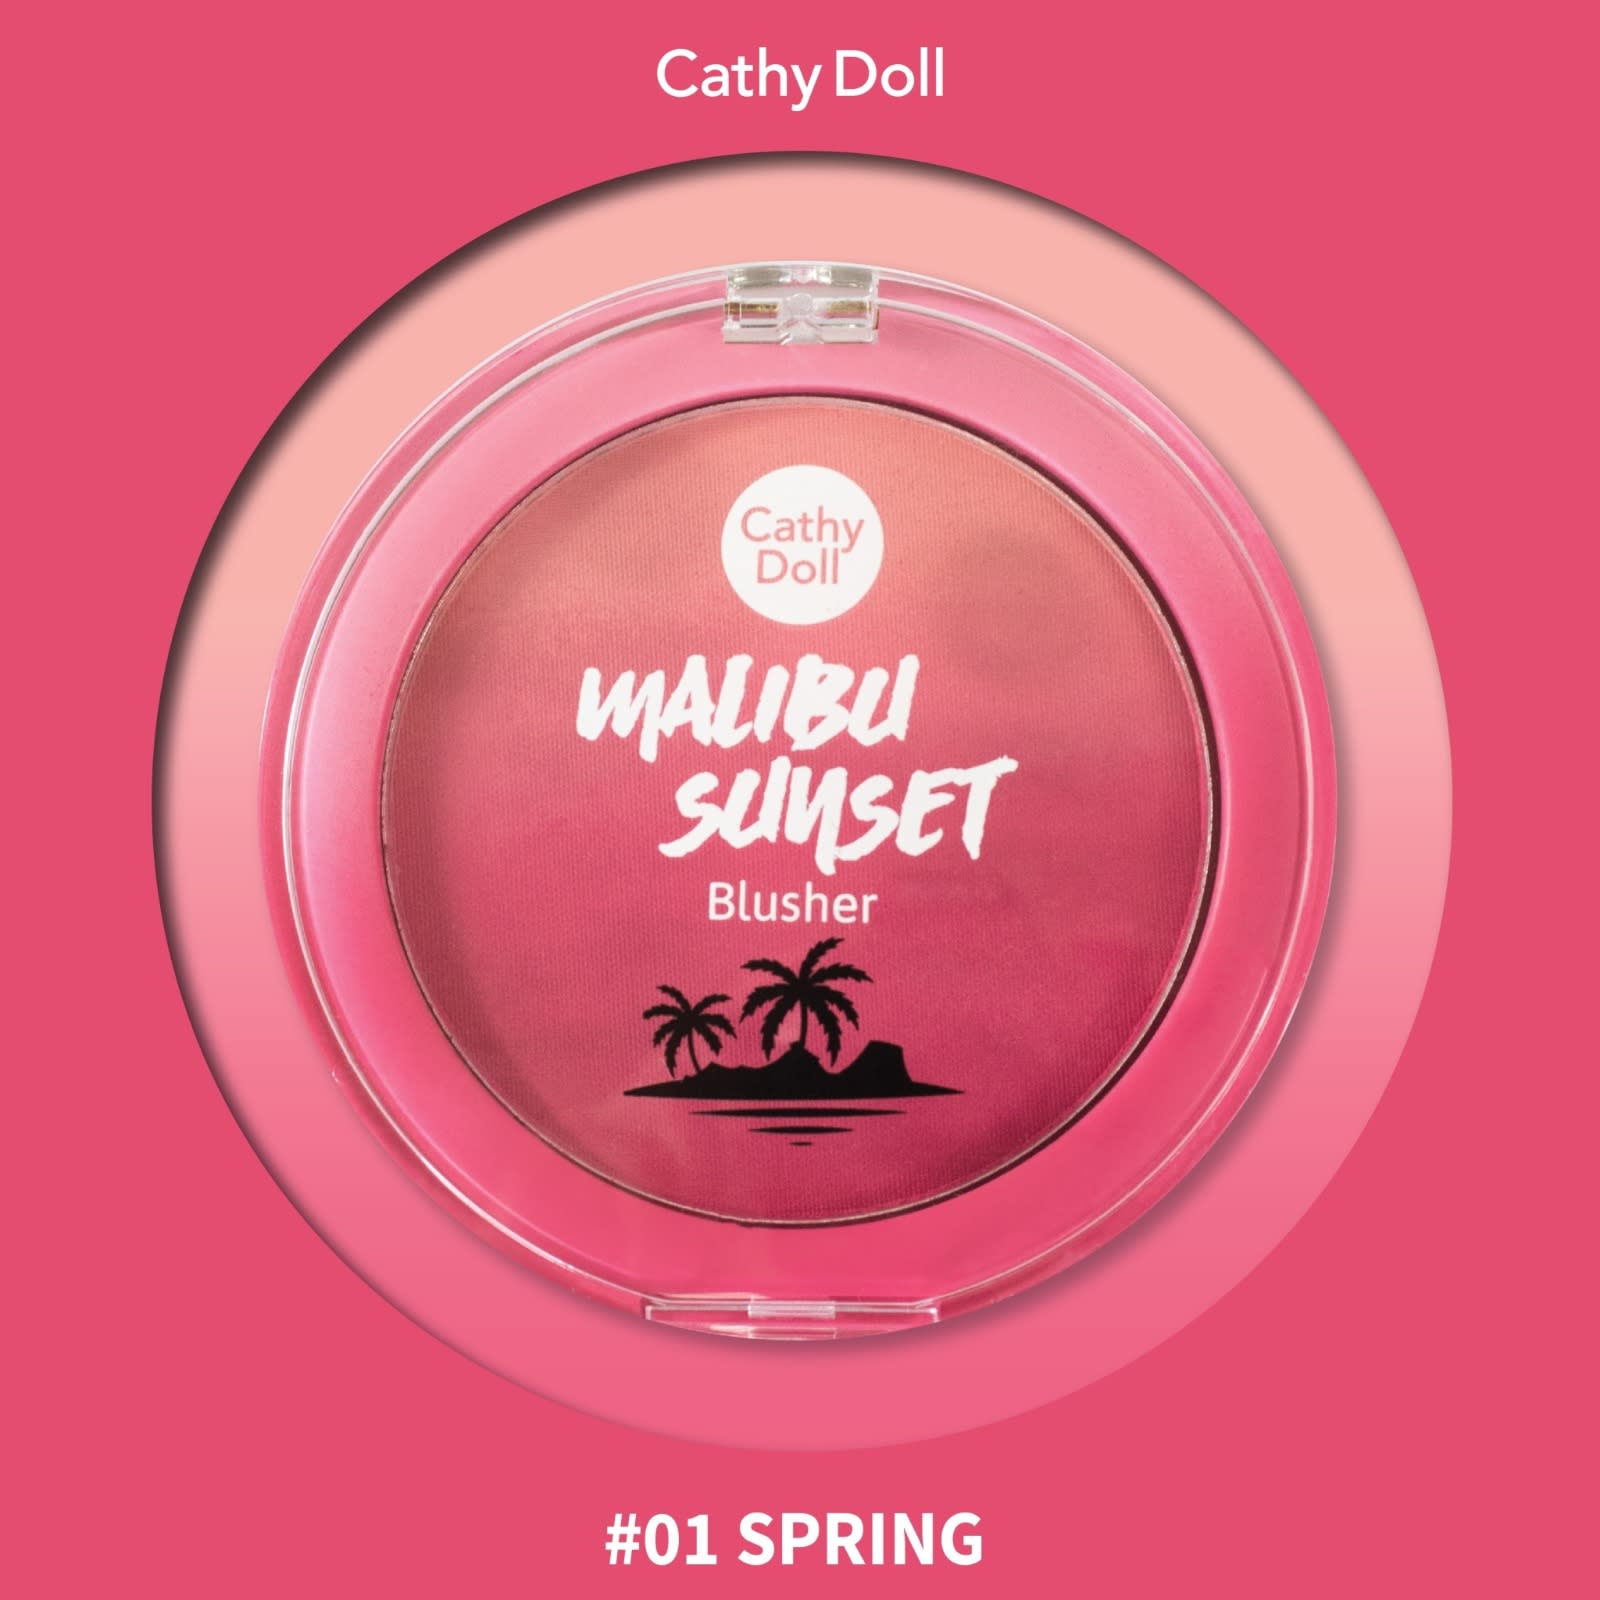 Cathy Doll Malibu Sunset Blusher #01 SPRING